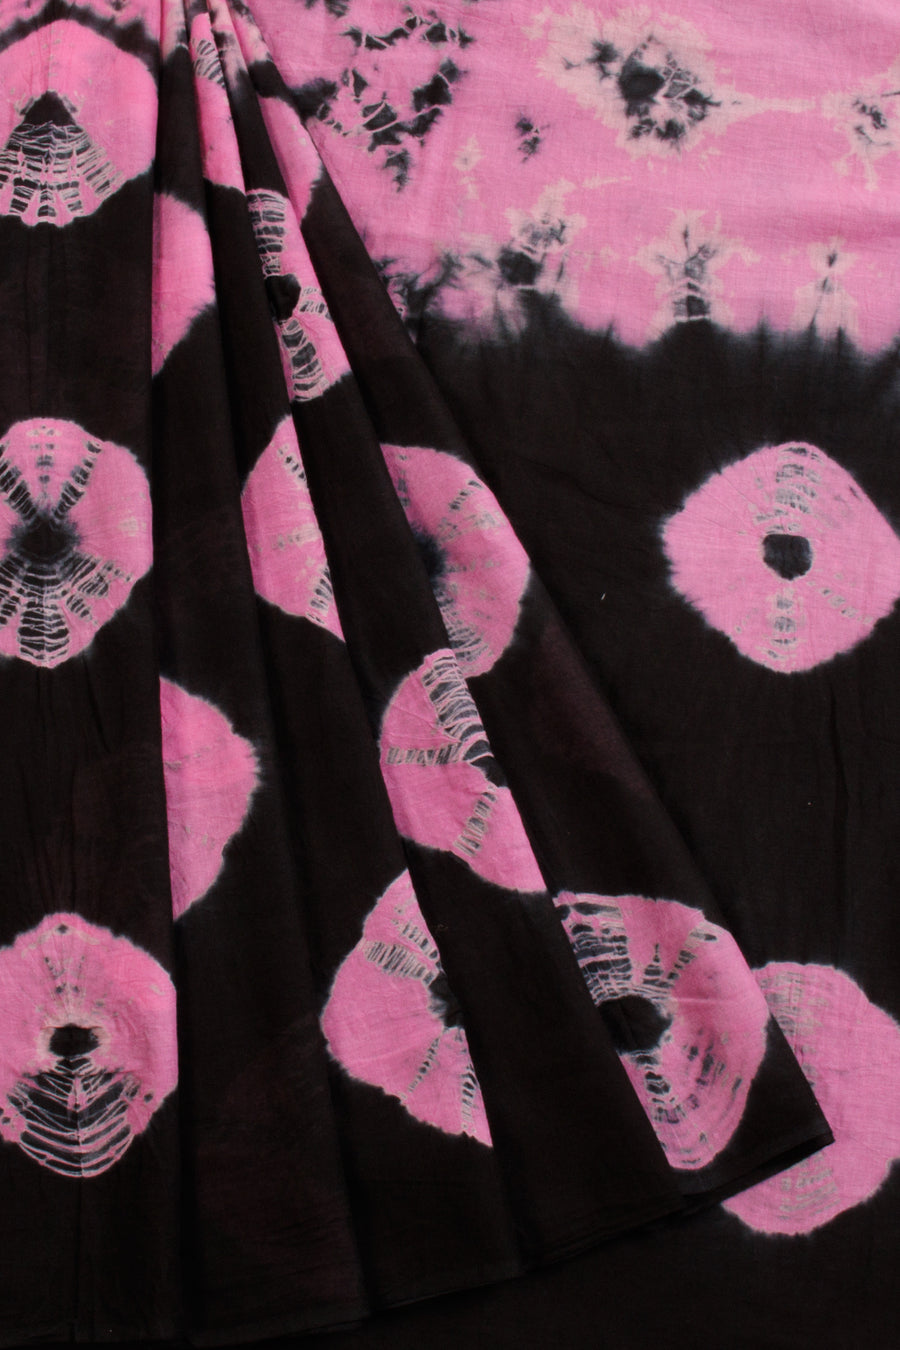 Black Shibori Printed Cotton Saree 10069073 - Avishya